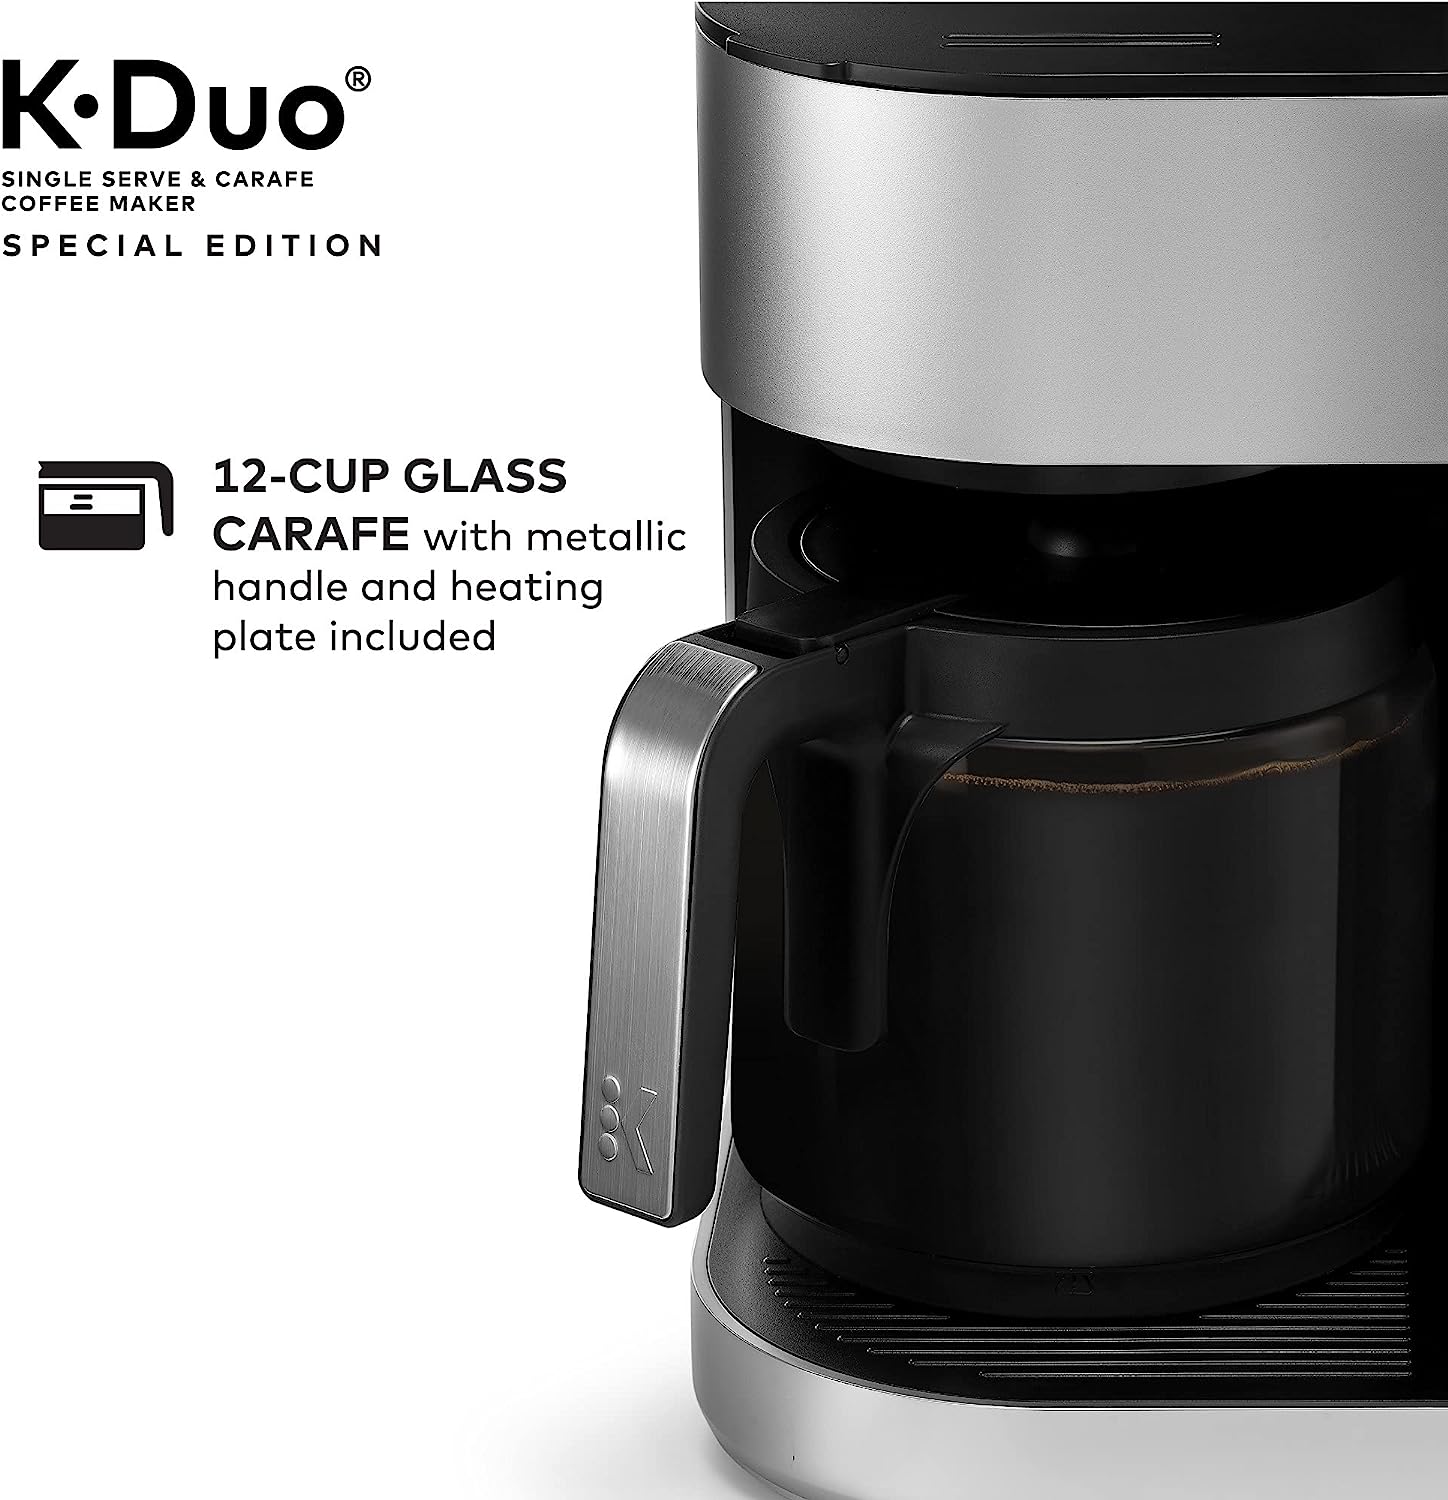 Keurig K-Duo Single Serve and Carafe Coffee Maker